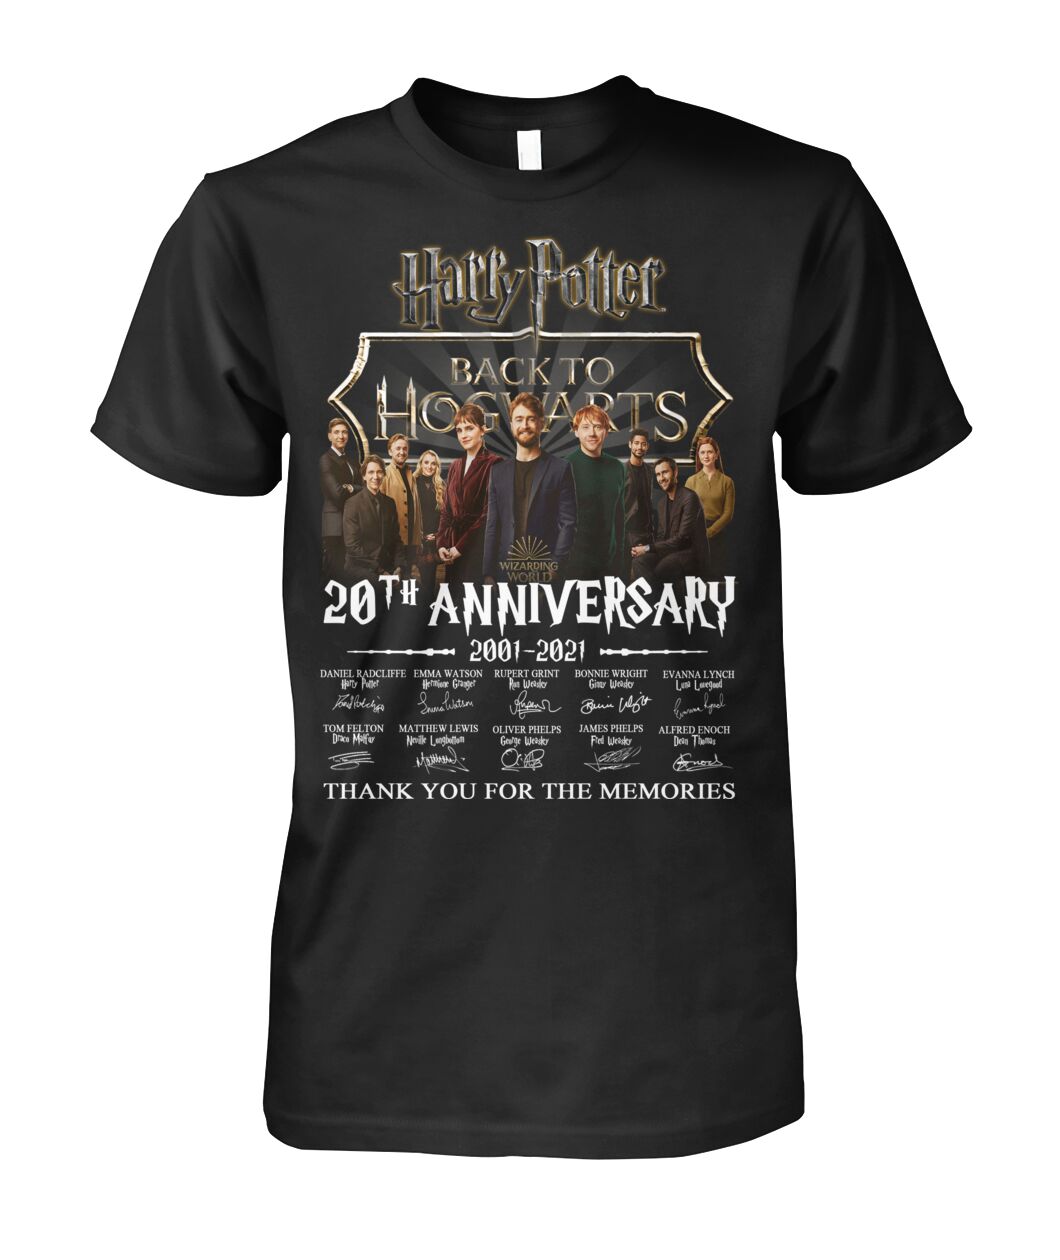 Harry Potter Back to Hogwarts 20th Anniversary 2001-2021 shirt, hoodie 17